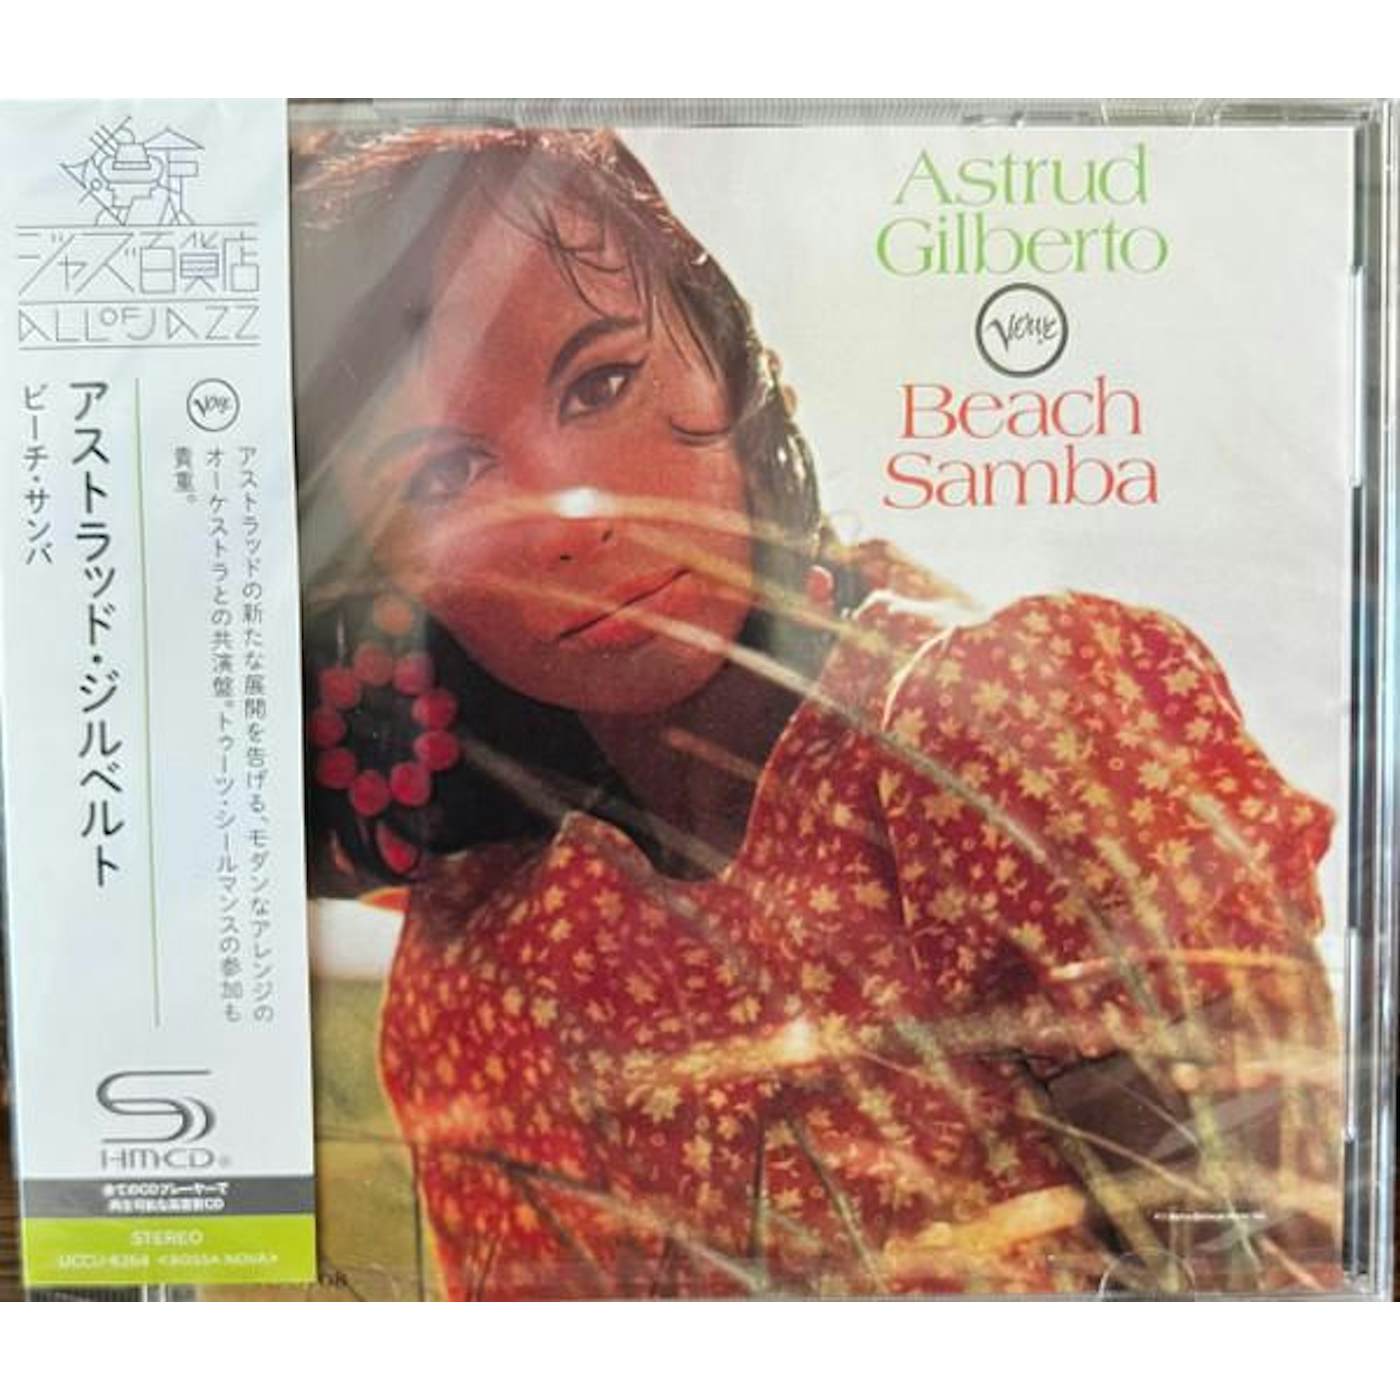 Astrud Gilberto BEACH SAMBA CD